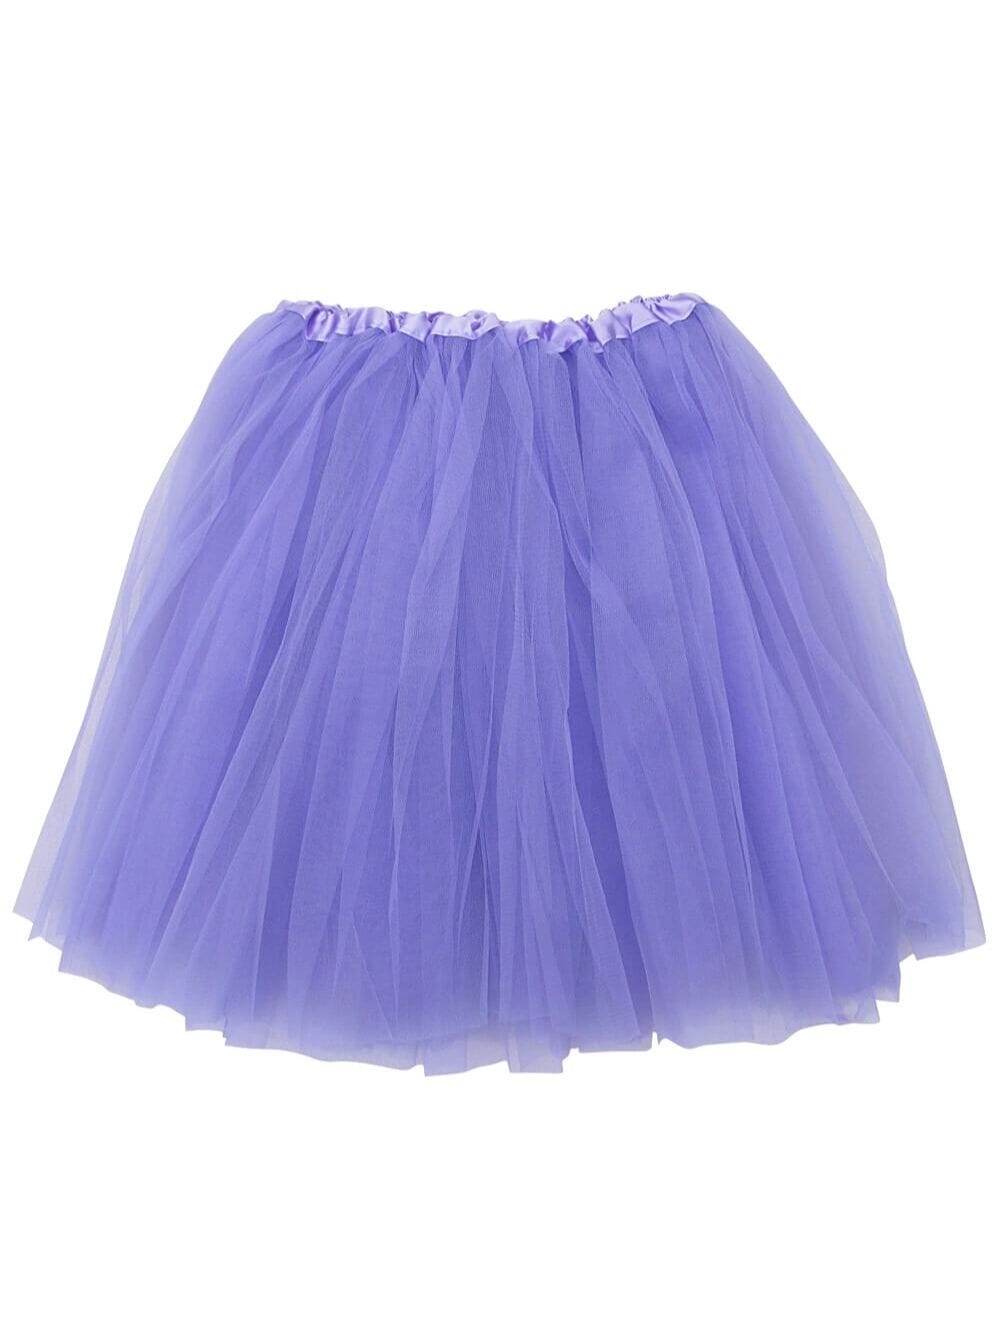 Lavender Plus Size Adult Tutu Skirt - Women's Plus Size 3- Layer Basic Ballet Costume Dance Tutus - Sydney So Sweet